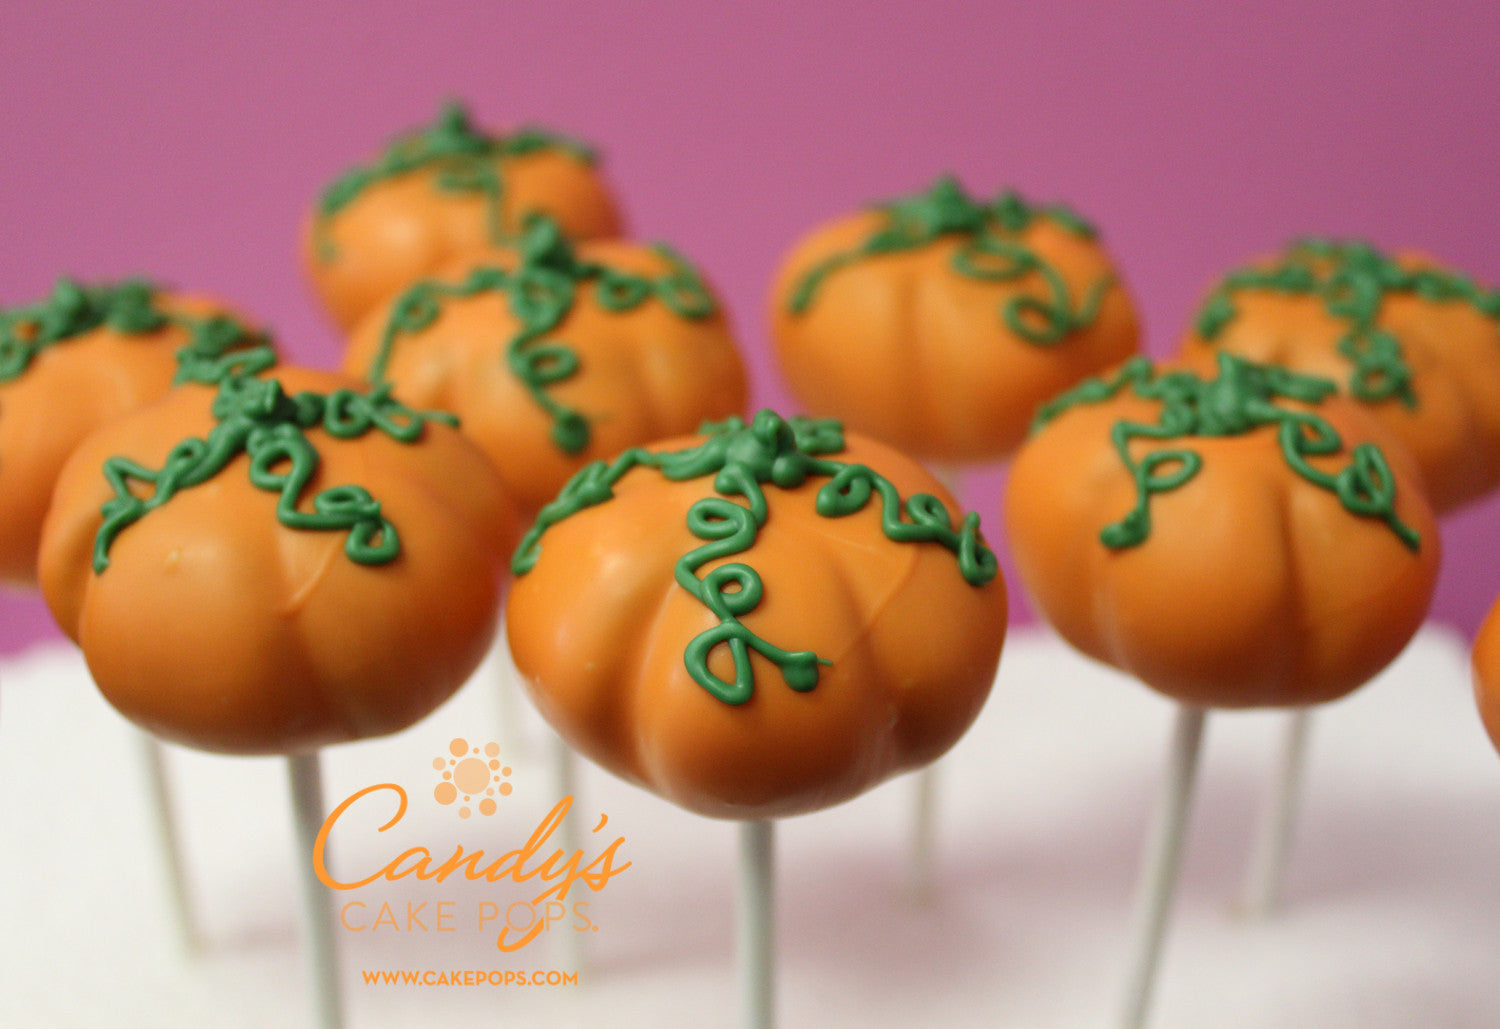 Pumpkin Cake Pops - Candy's Cake Pops